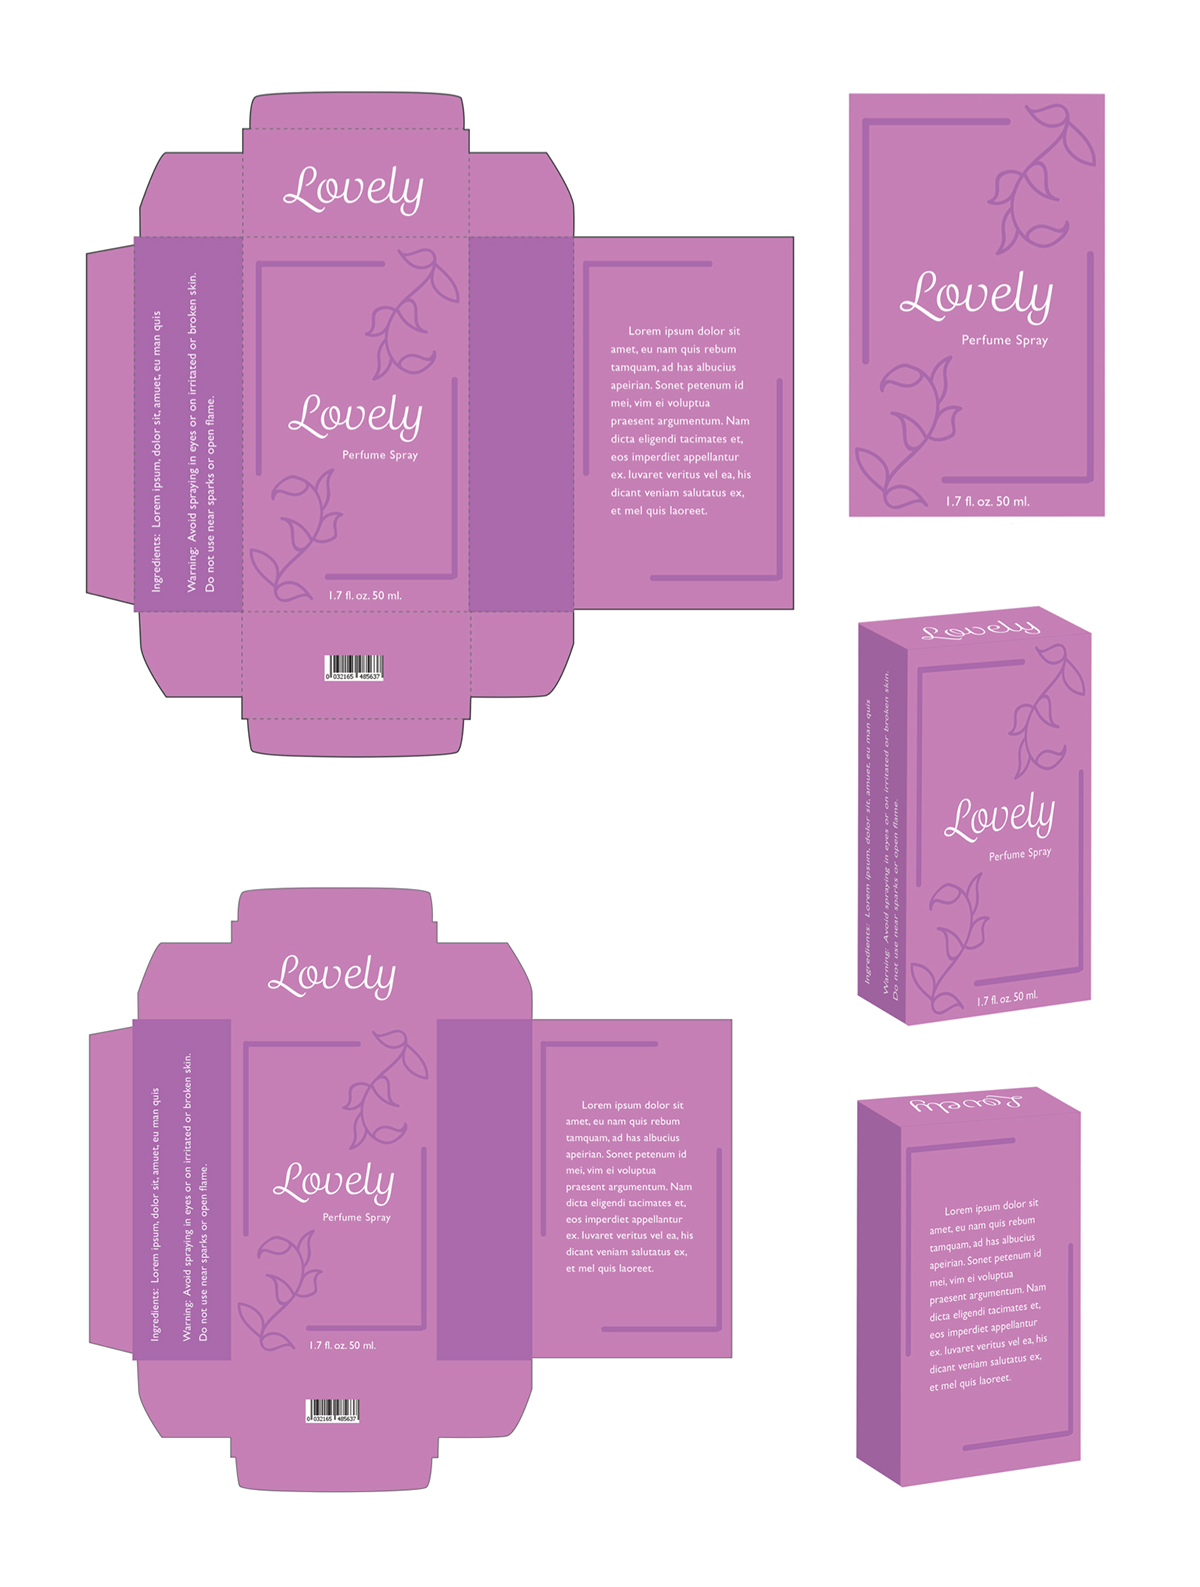 Adobe Portfolio lovely purple violet perfume package design simple Mockup